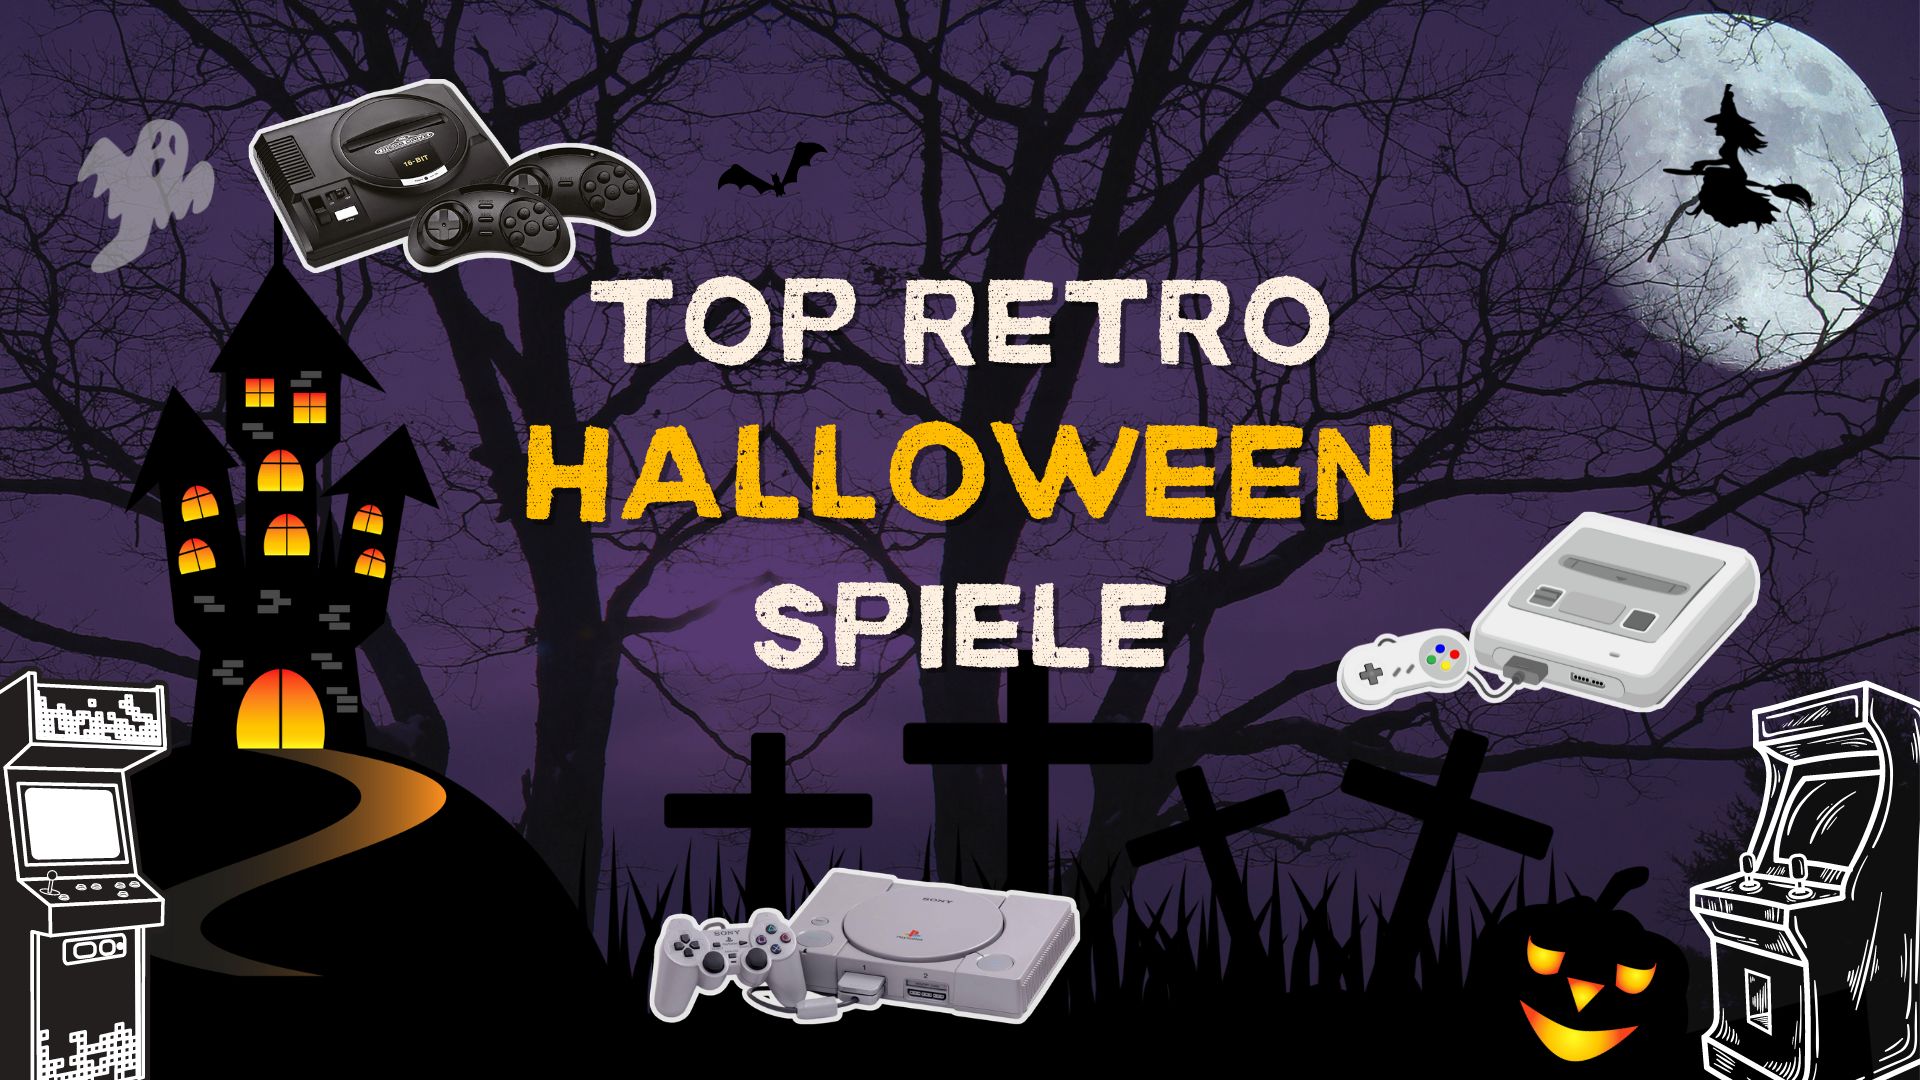 Top Retro Halloween Spiele